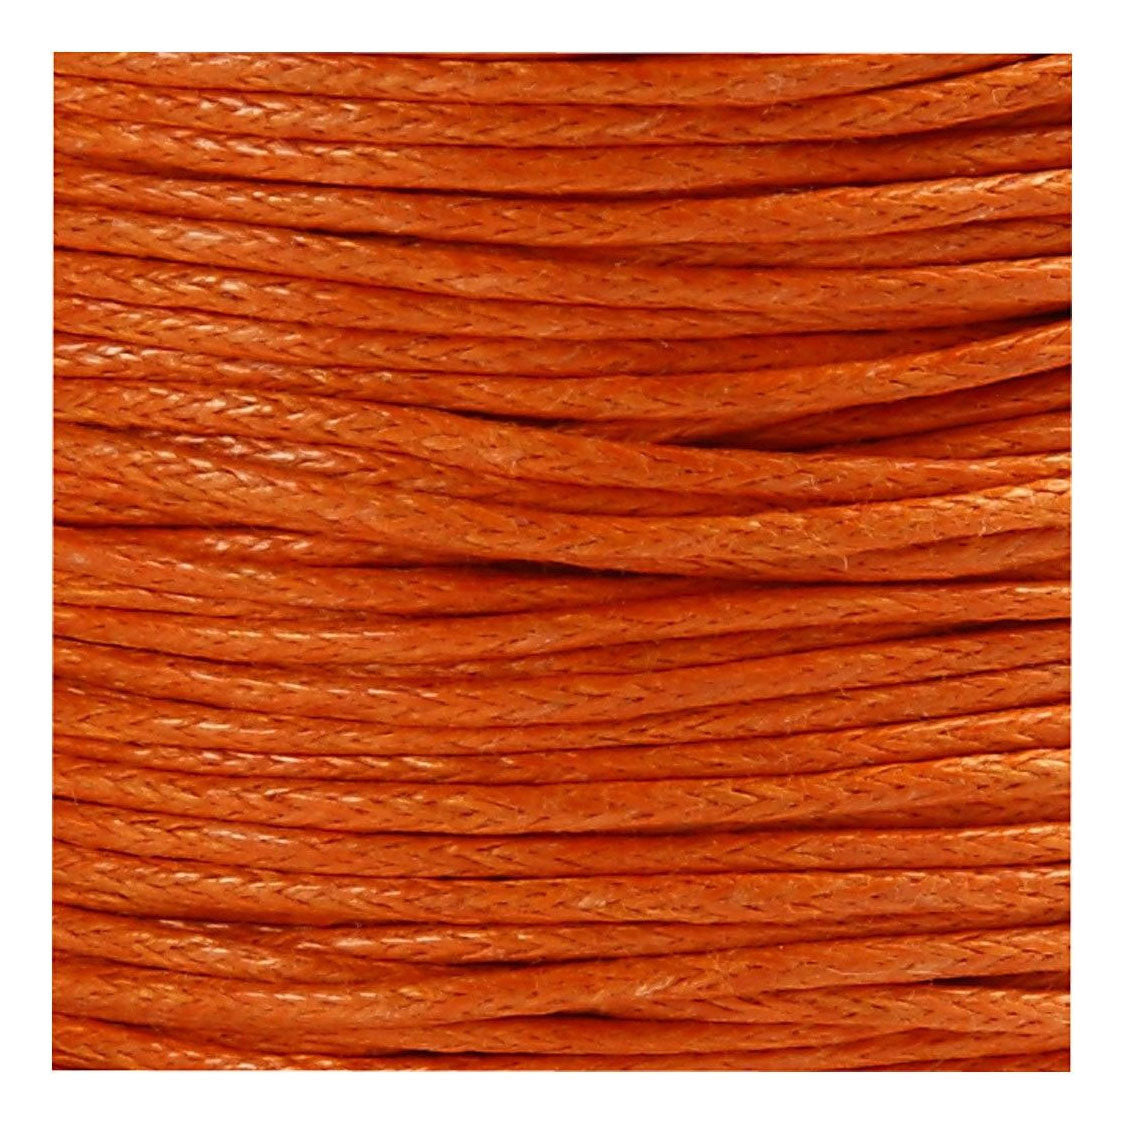 Creativ Company Cordón de algodón Naranja, 40m